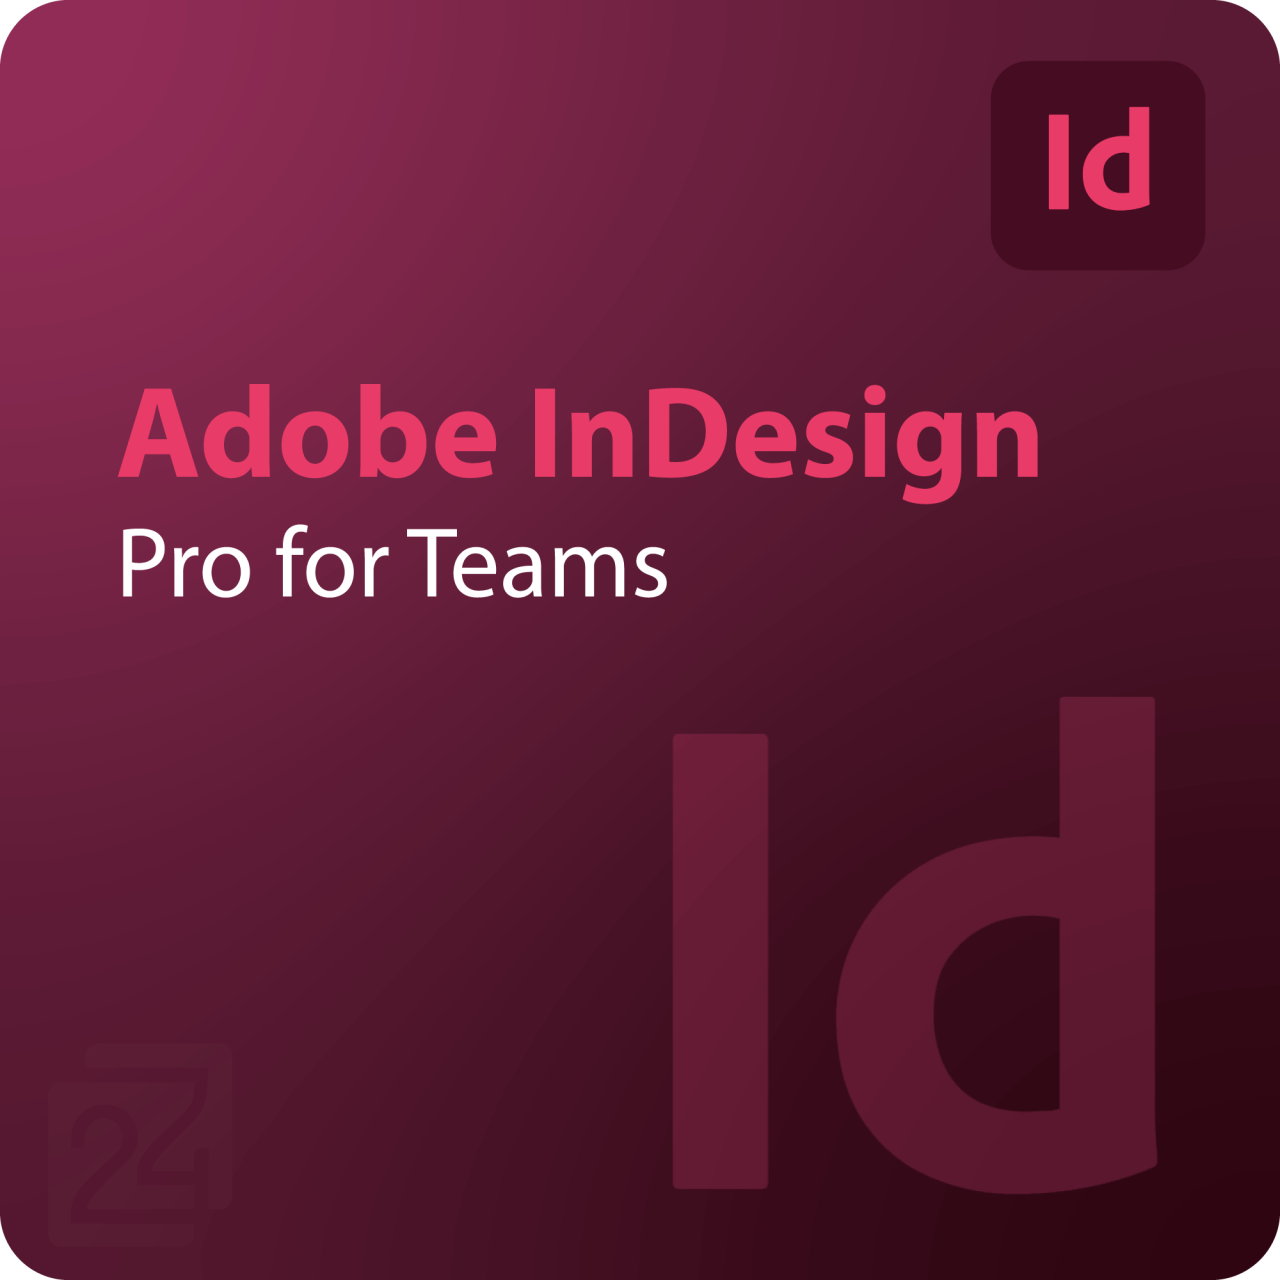 Adobe InDesign - Pro for Teams